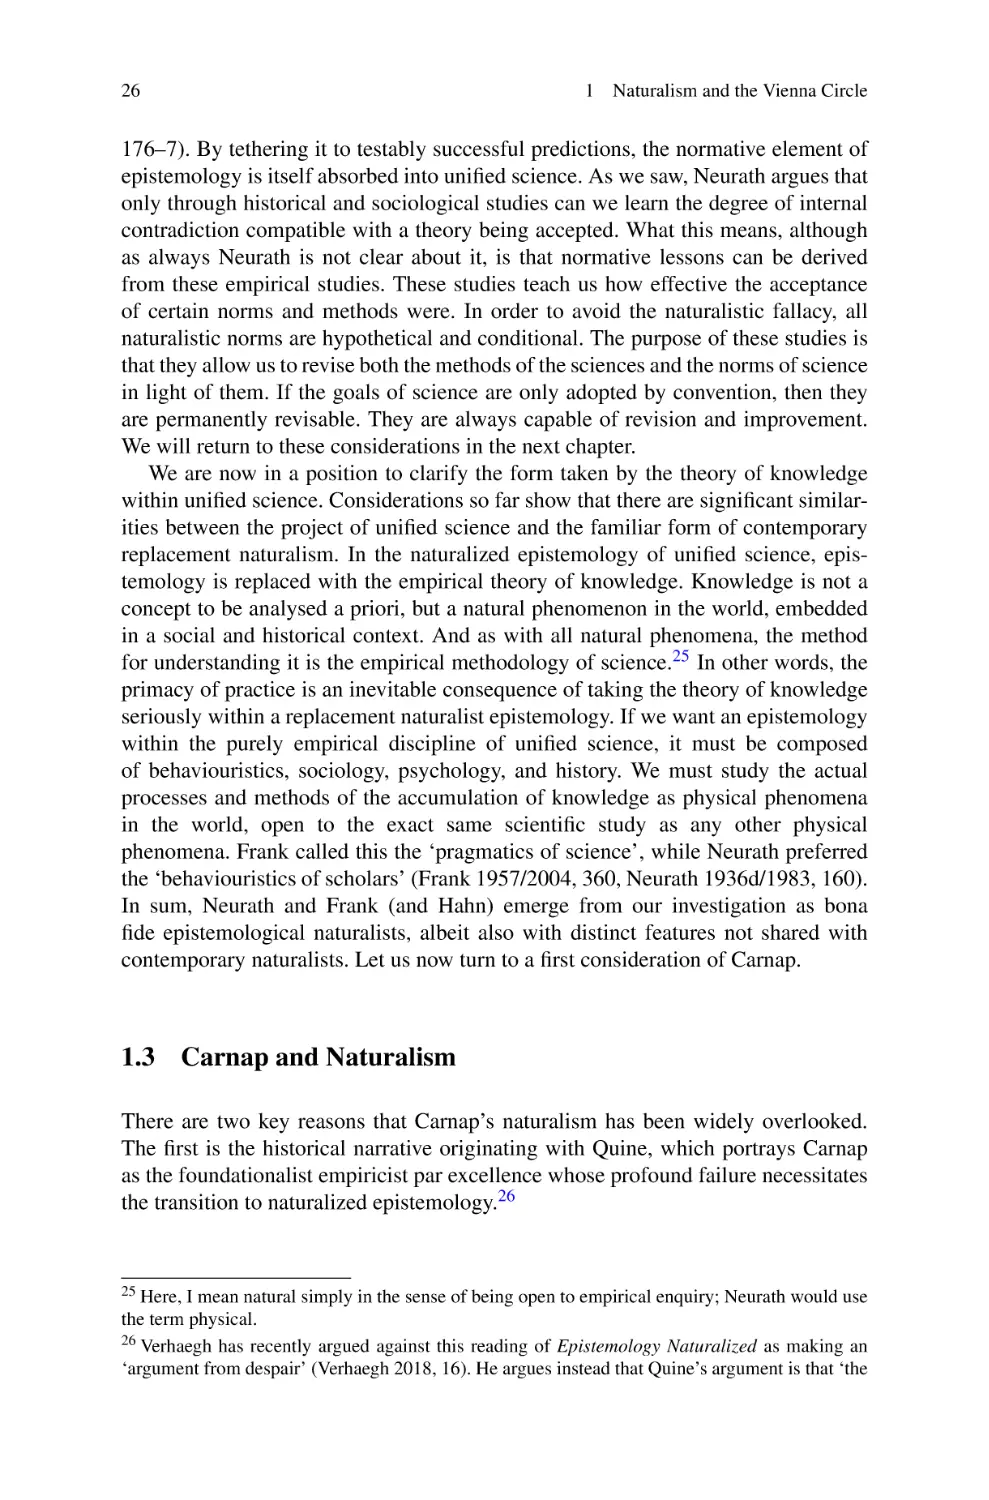 1.3 Carnap and Naturalism